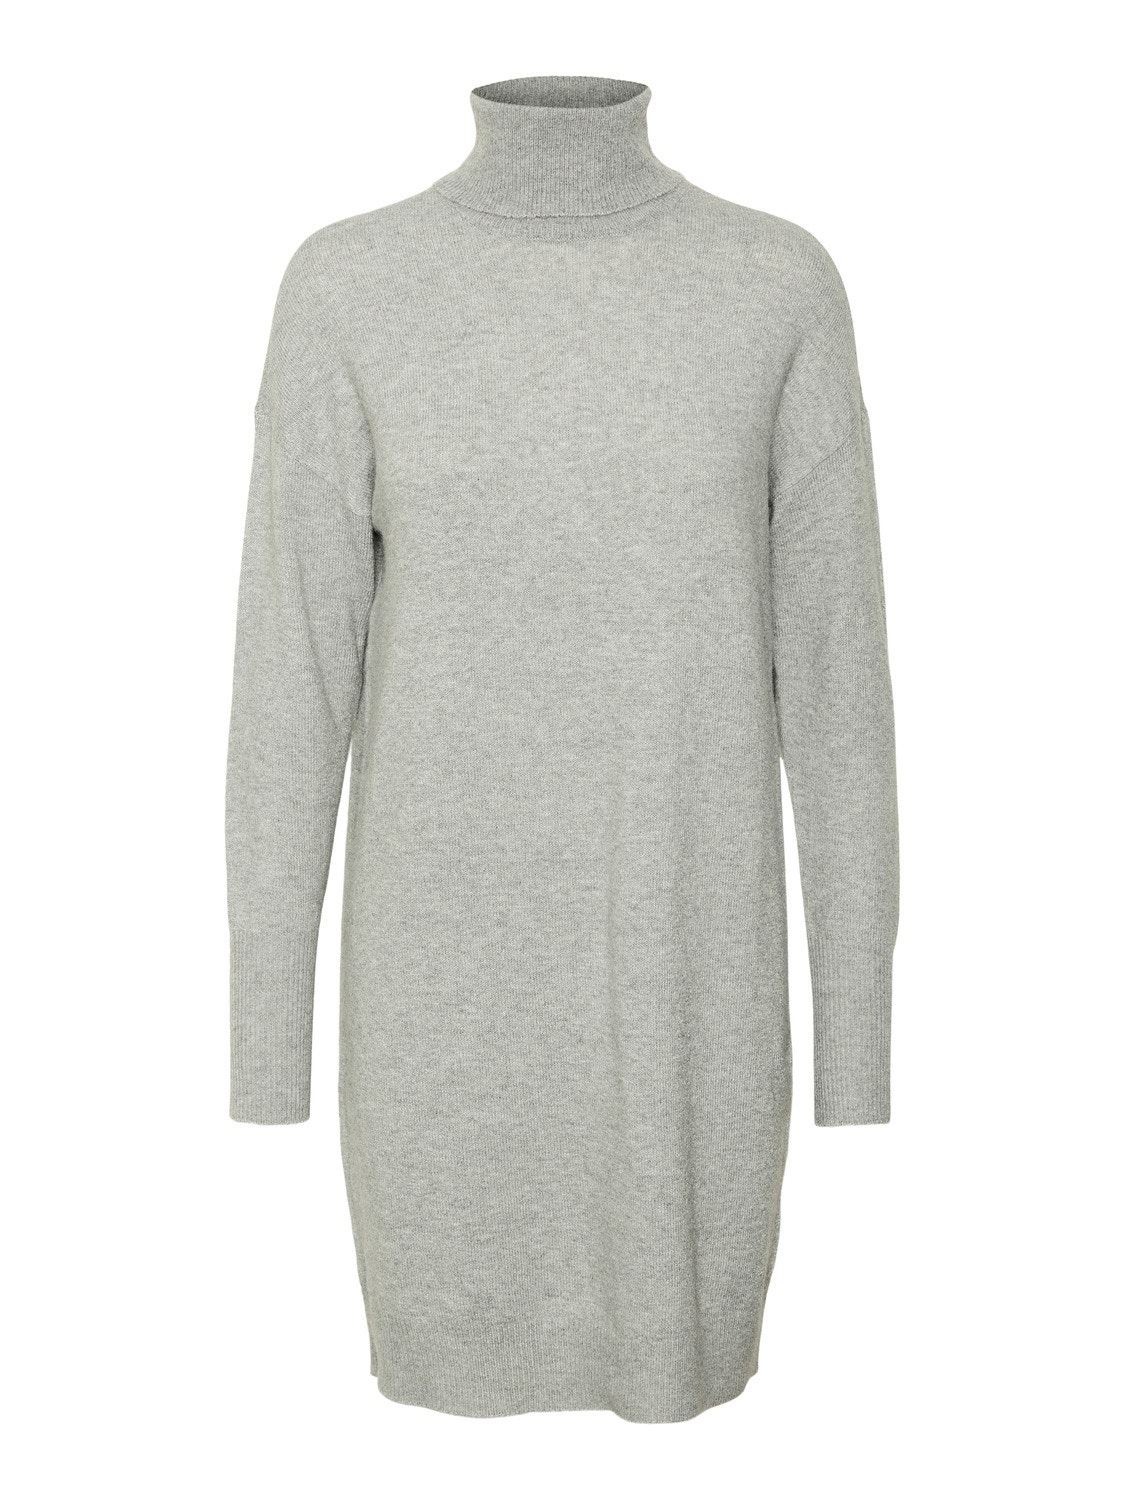 Vero Moda VMBRILLIANT Kurzes Kleid -Light Grey Melange - 10199744